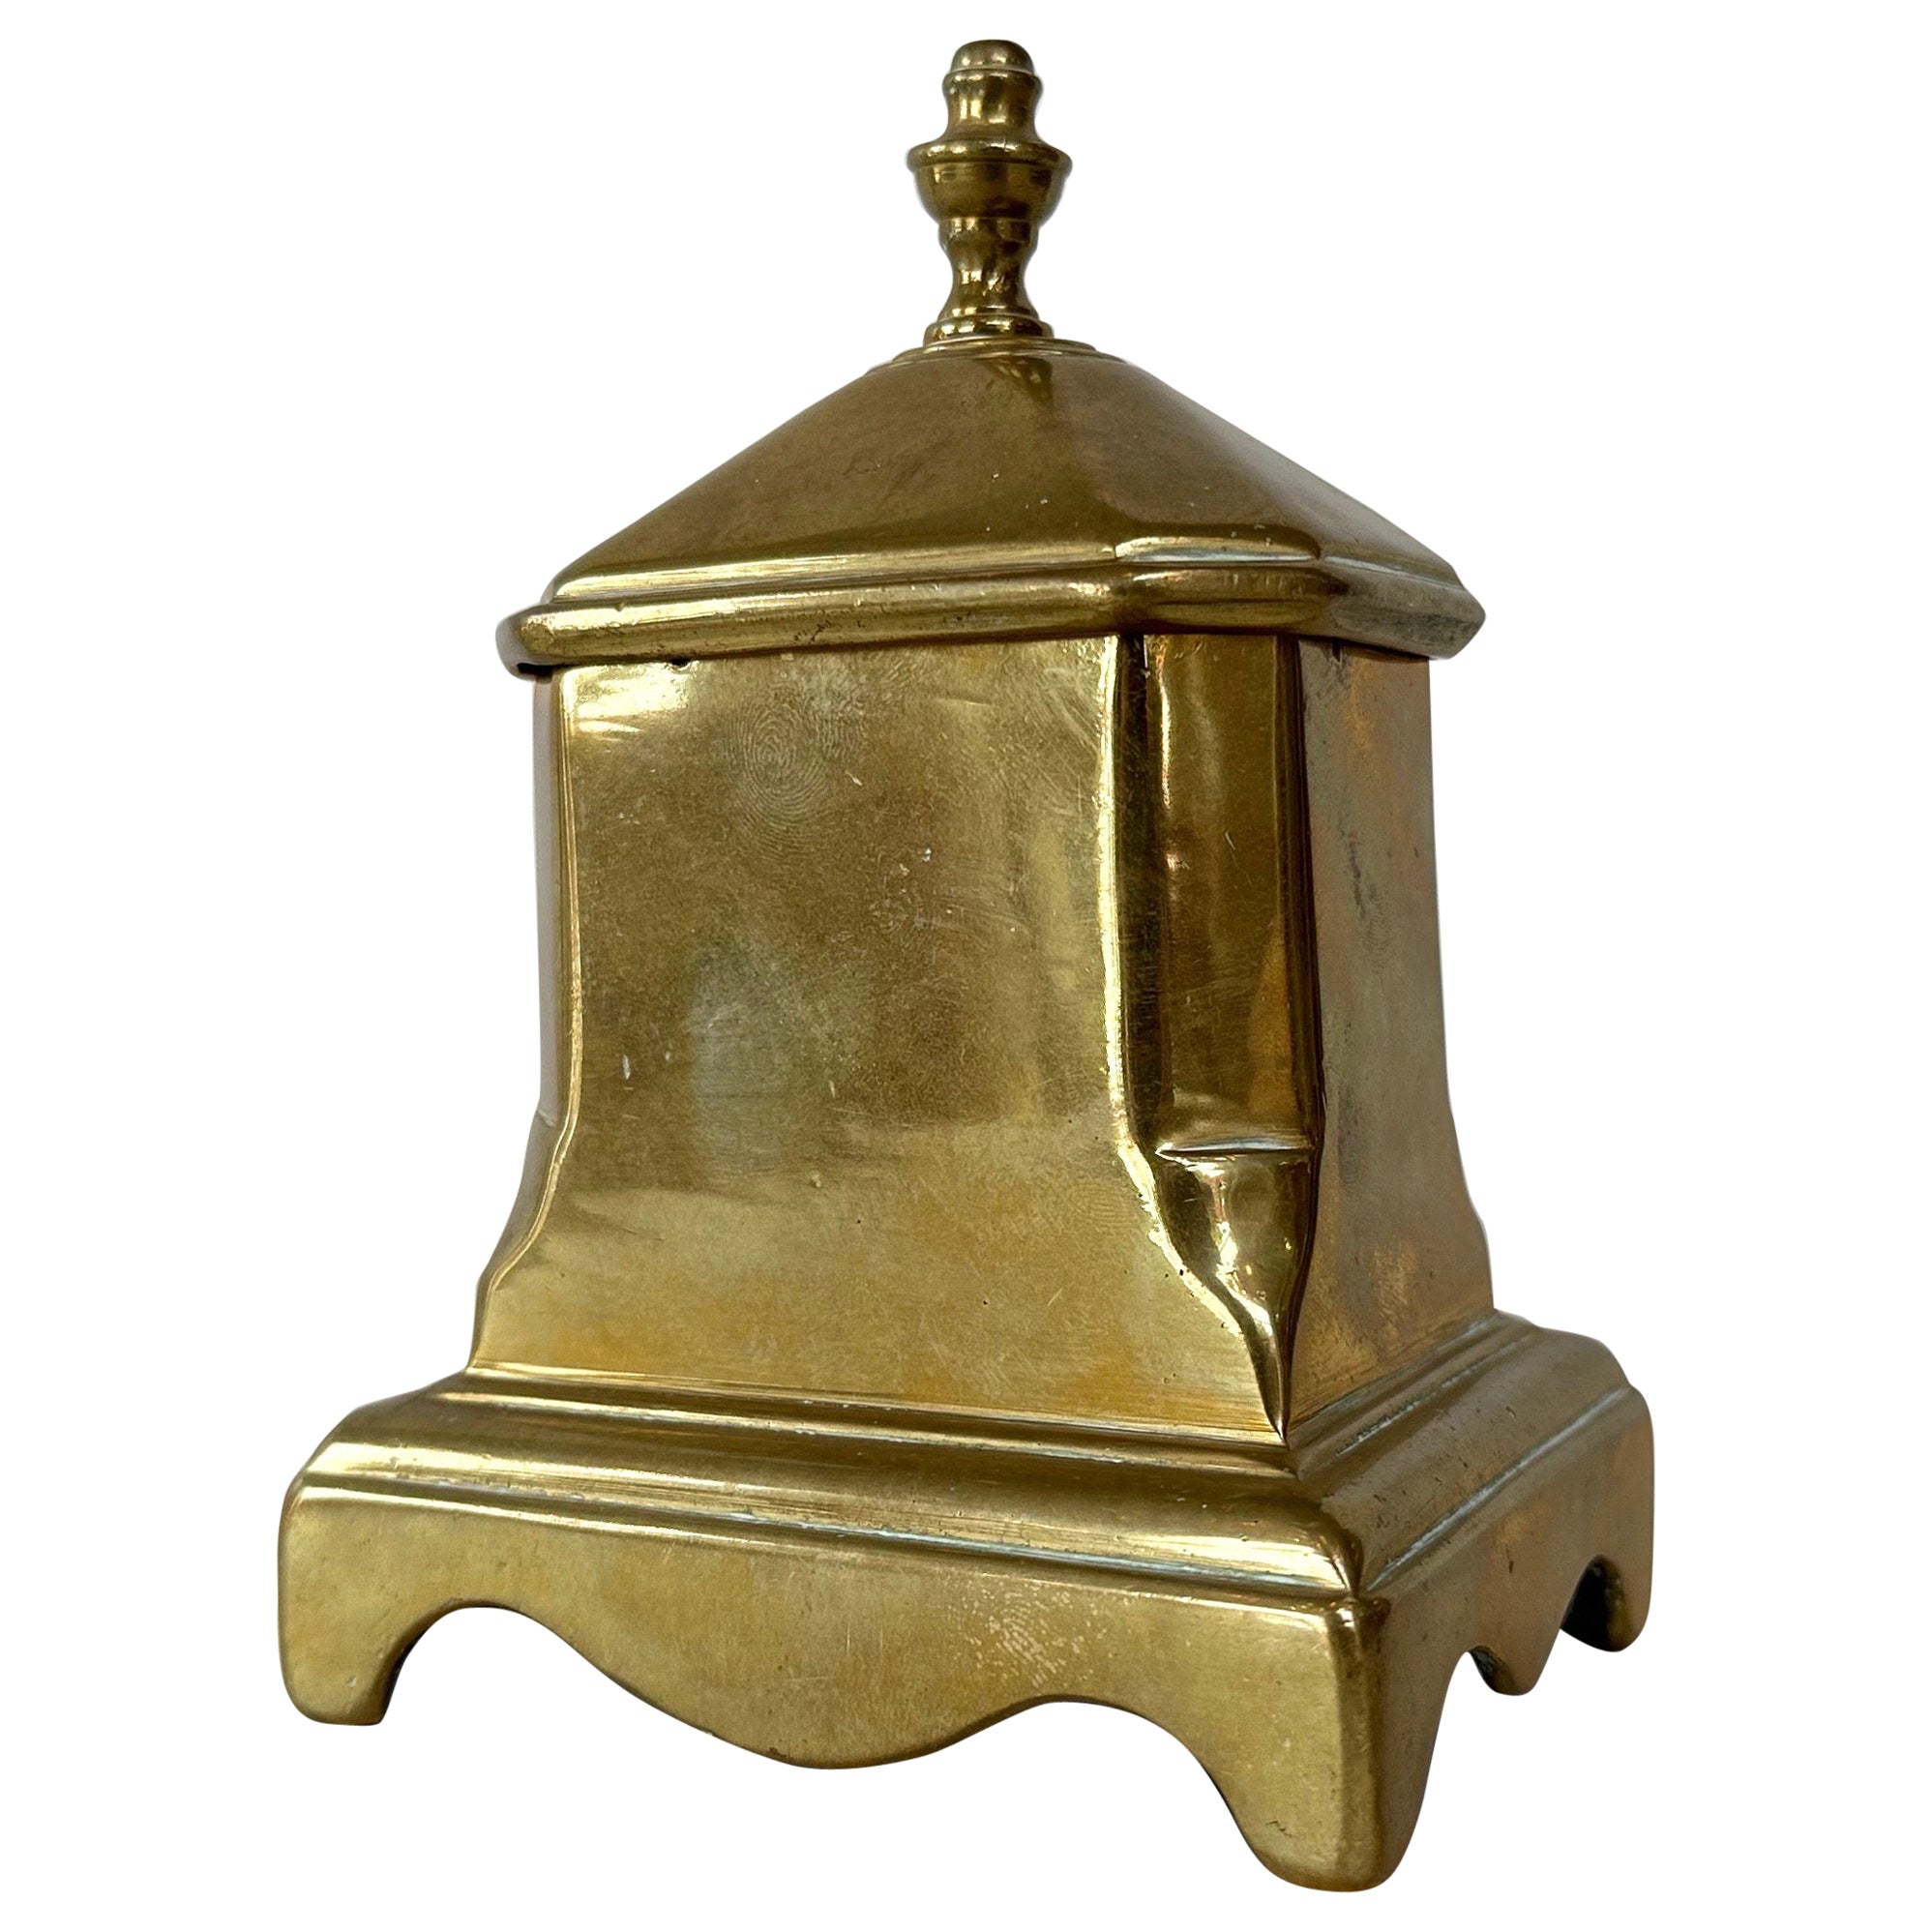 Antique American Queen Anne Period Lidded Brass Tobacco Box, circa 1750